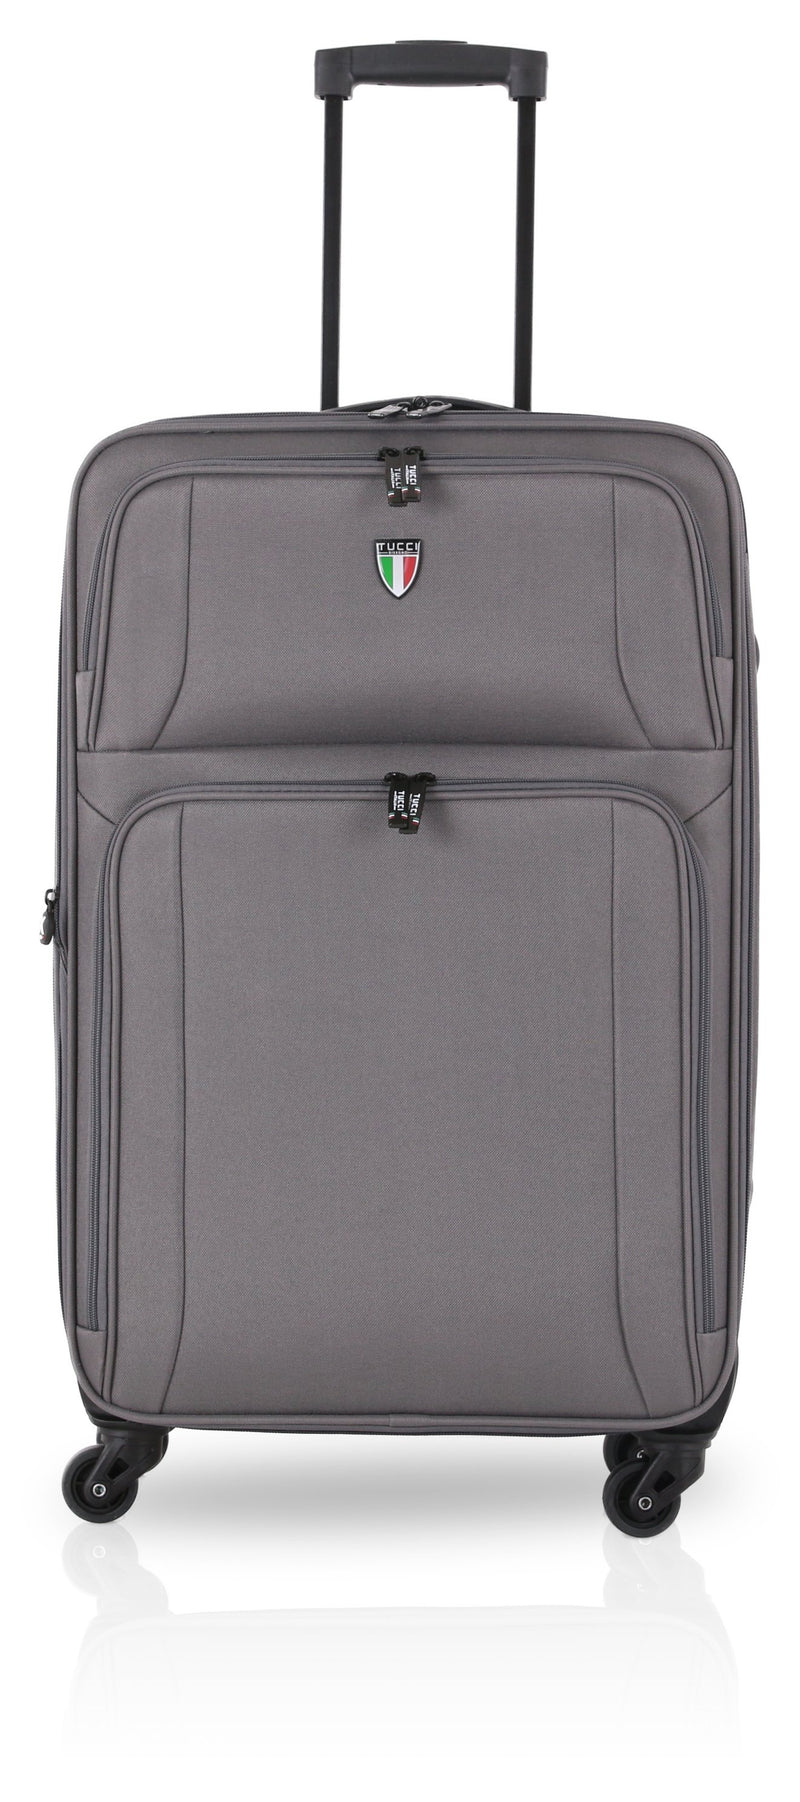 TUCCI Italy DISINVOLTA FABRIC 20" Carry On Suitcase